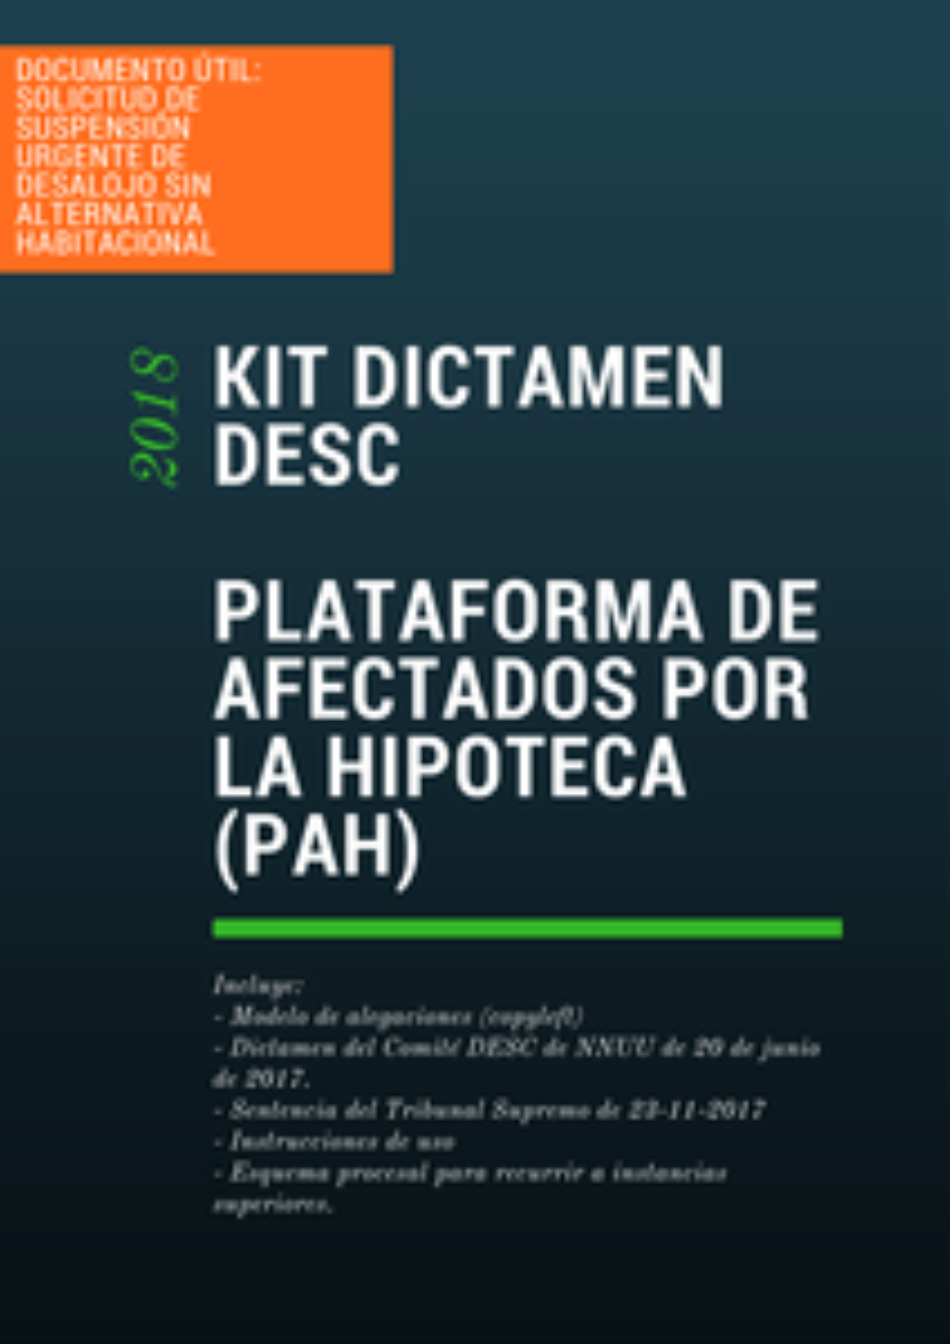 Nuevo pack de documentos útiles – “Kit Dictamen DESC” para paralización urgente de desalojos